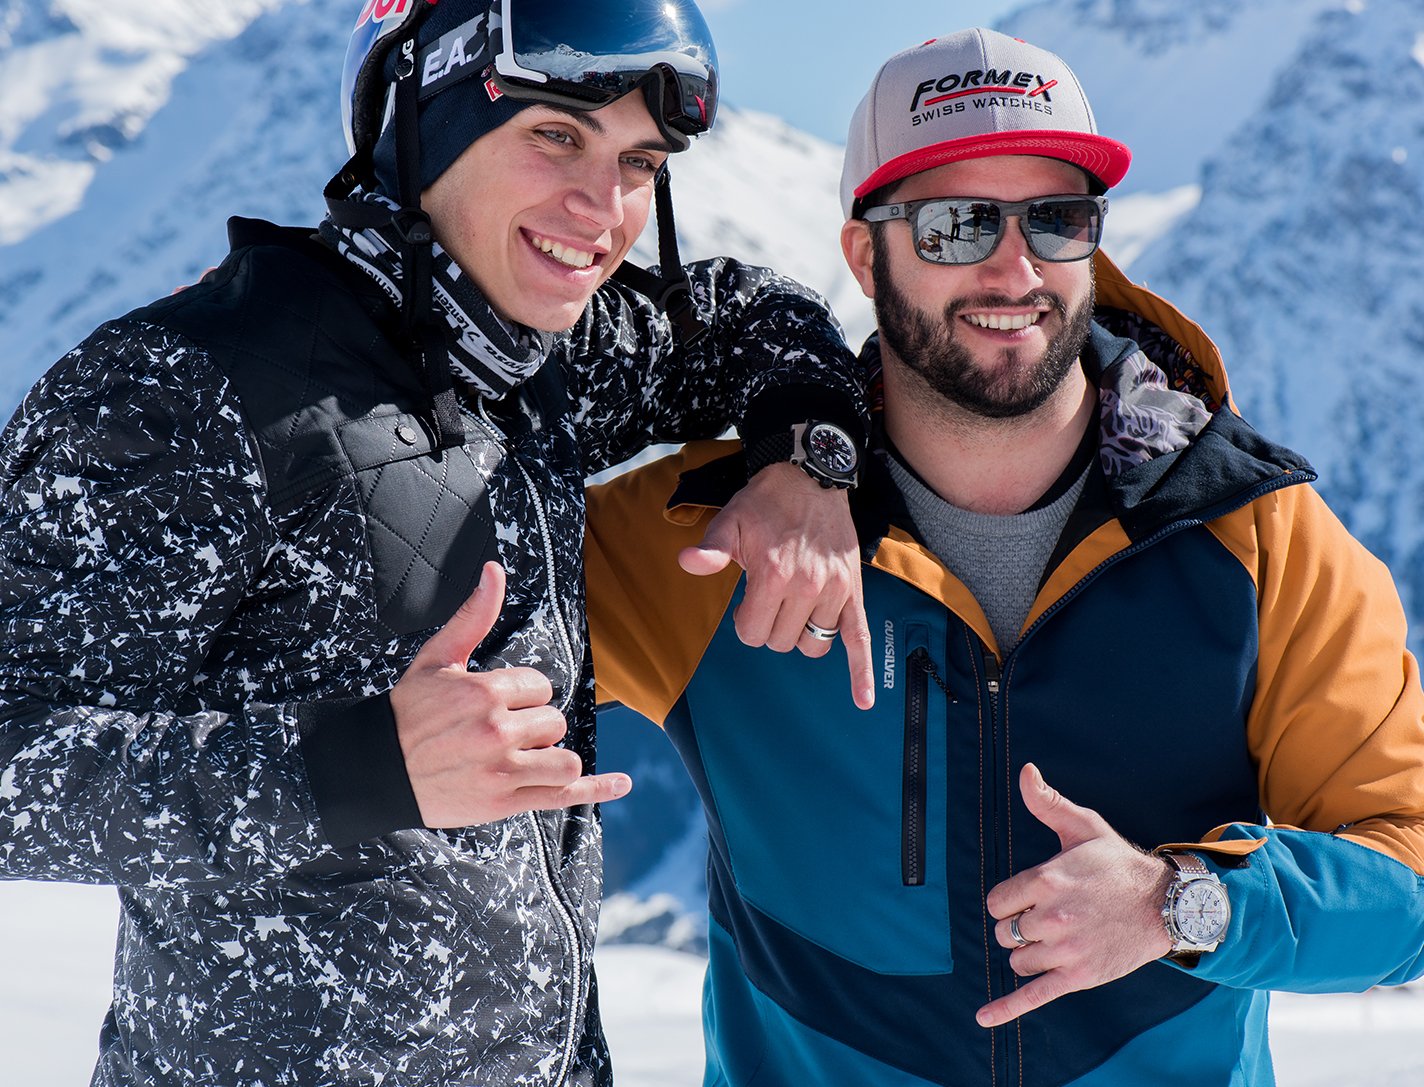 Formex Ambassador: Freestyle Skier Elias Ambühl